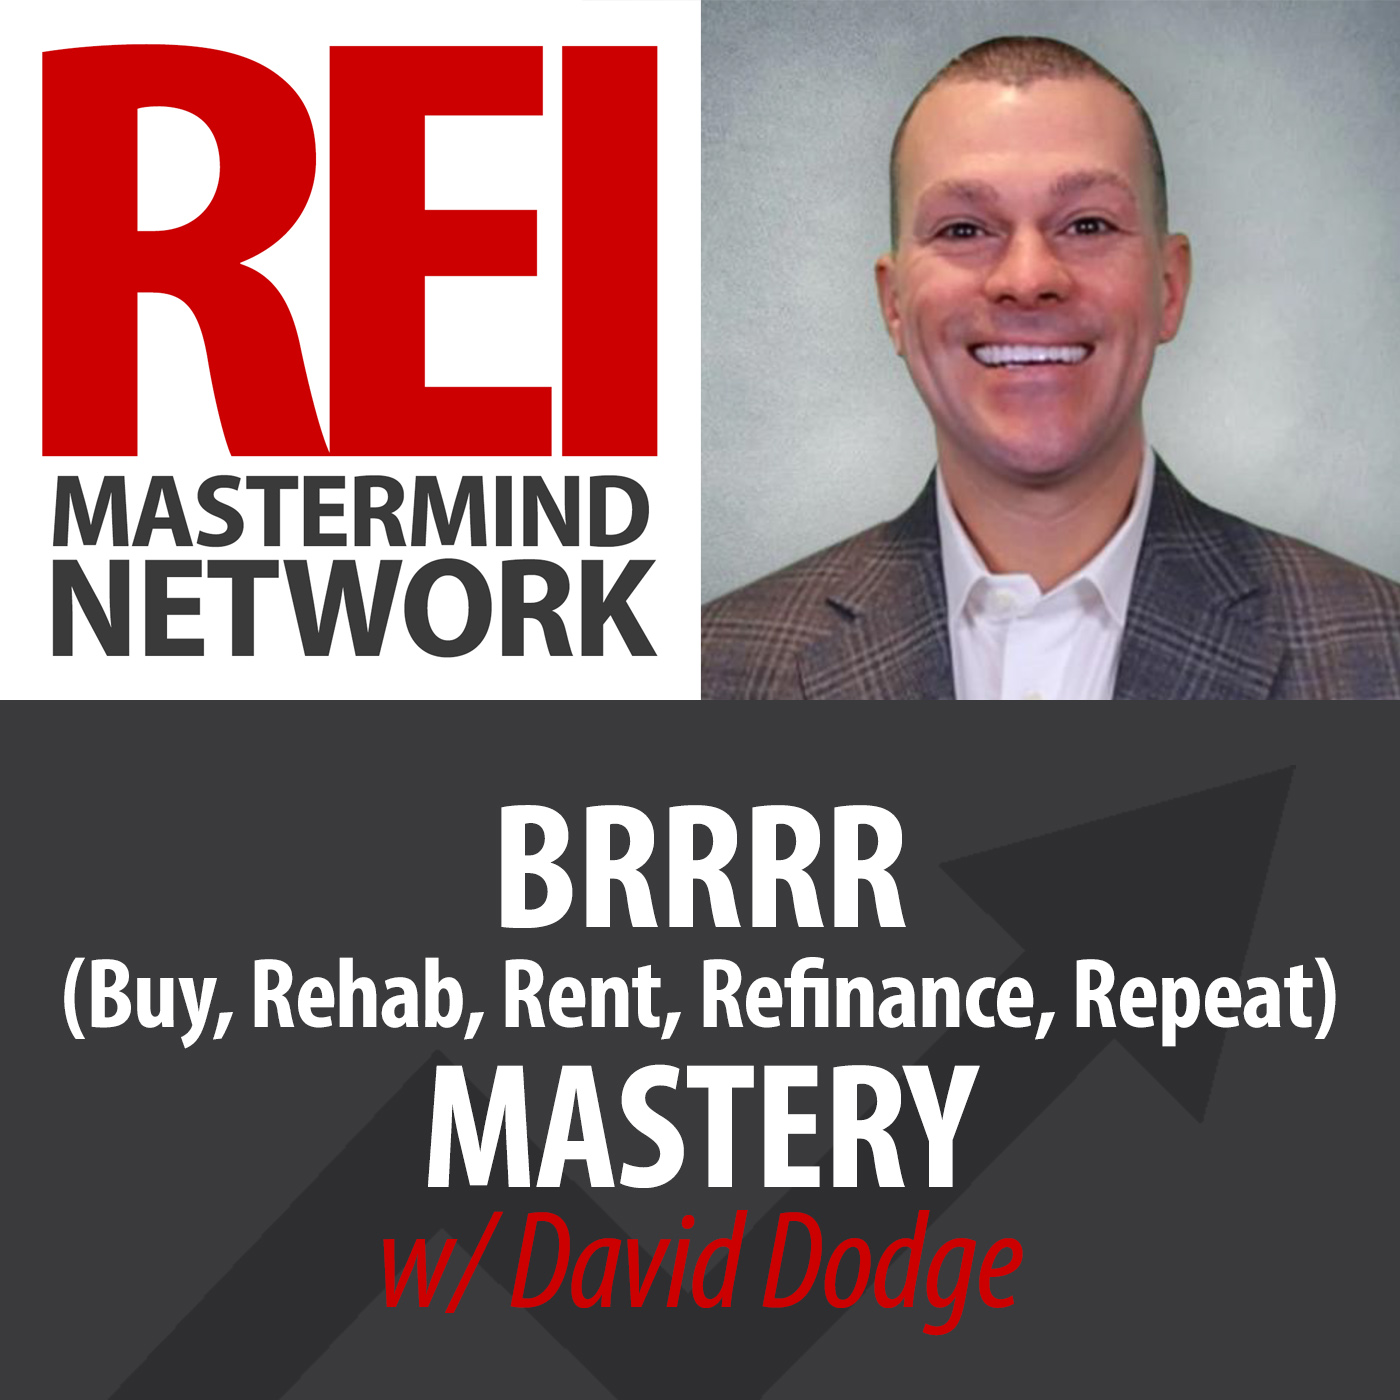 BRRRR Mastery with David Dodge Image